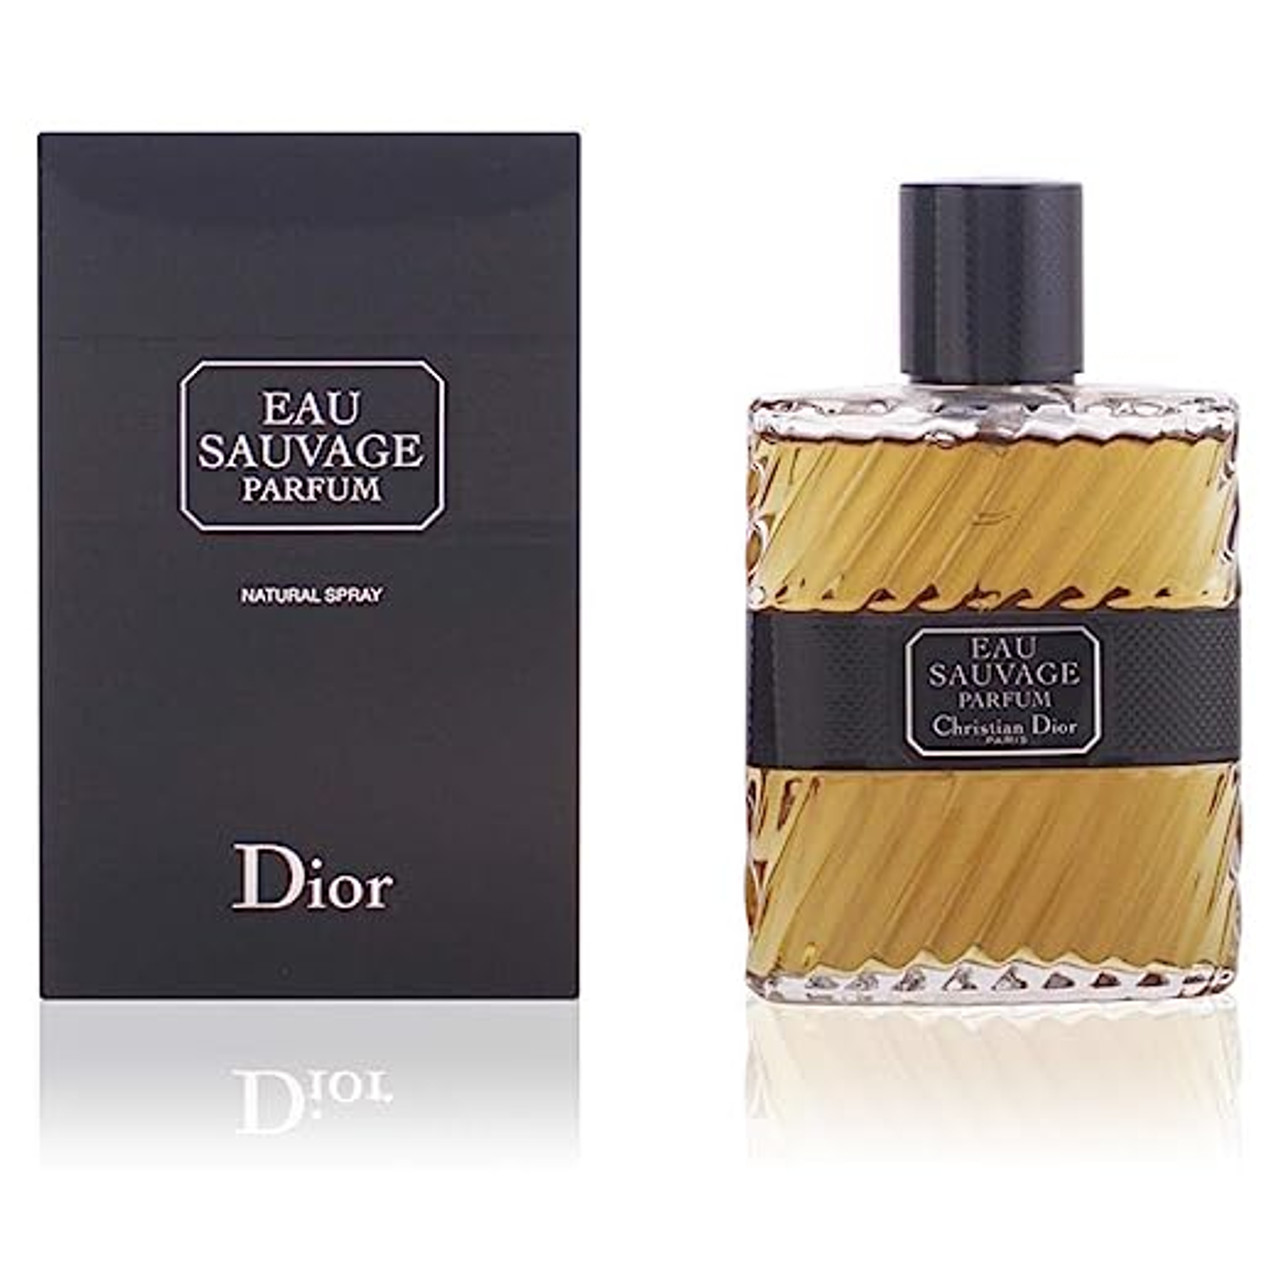 EAU SAUVAGE Dior Eau Sauvage Parfum 50ml